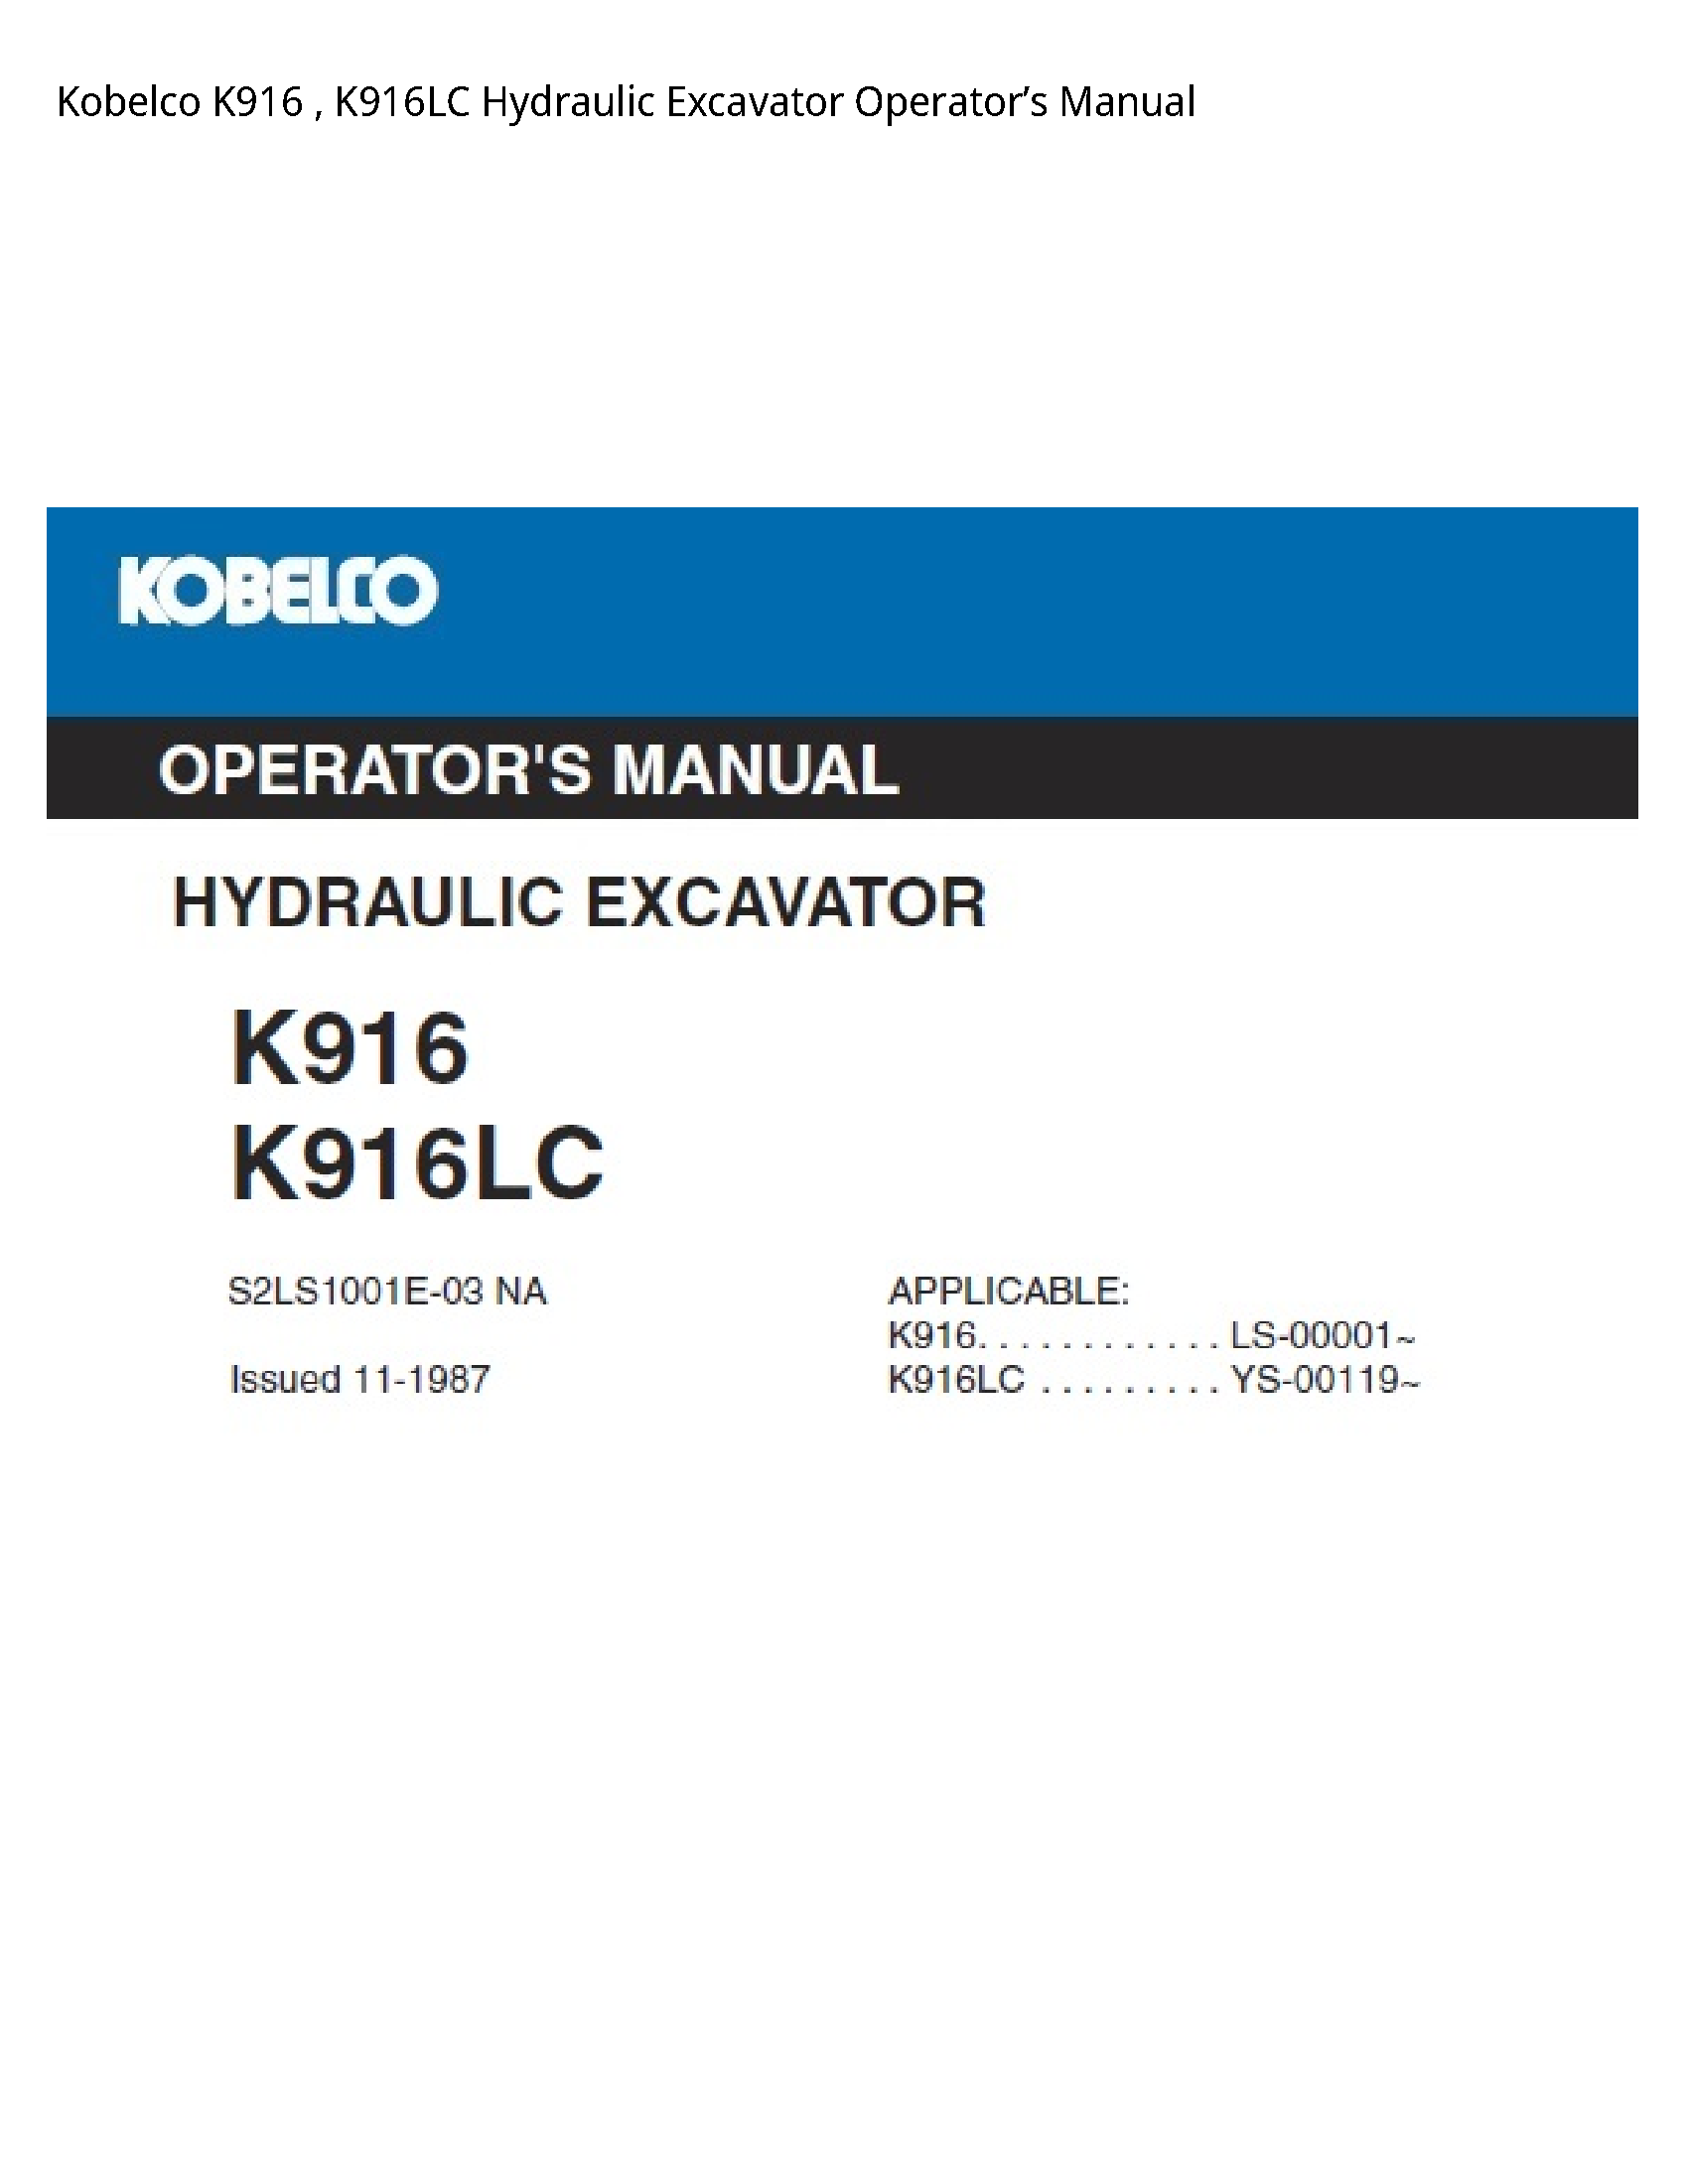 Kobelco K916 Hydraulic Excavator Operator’s manual